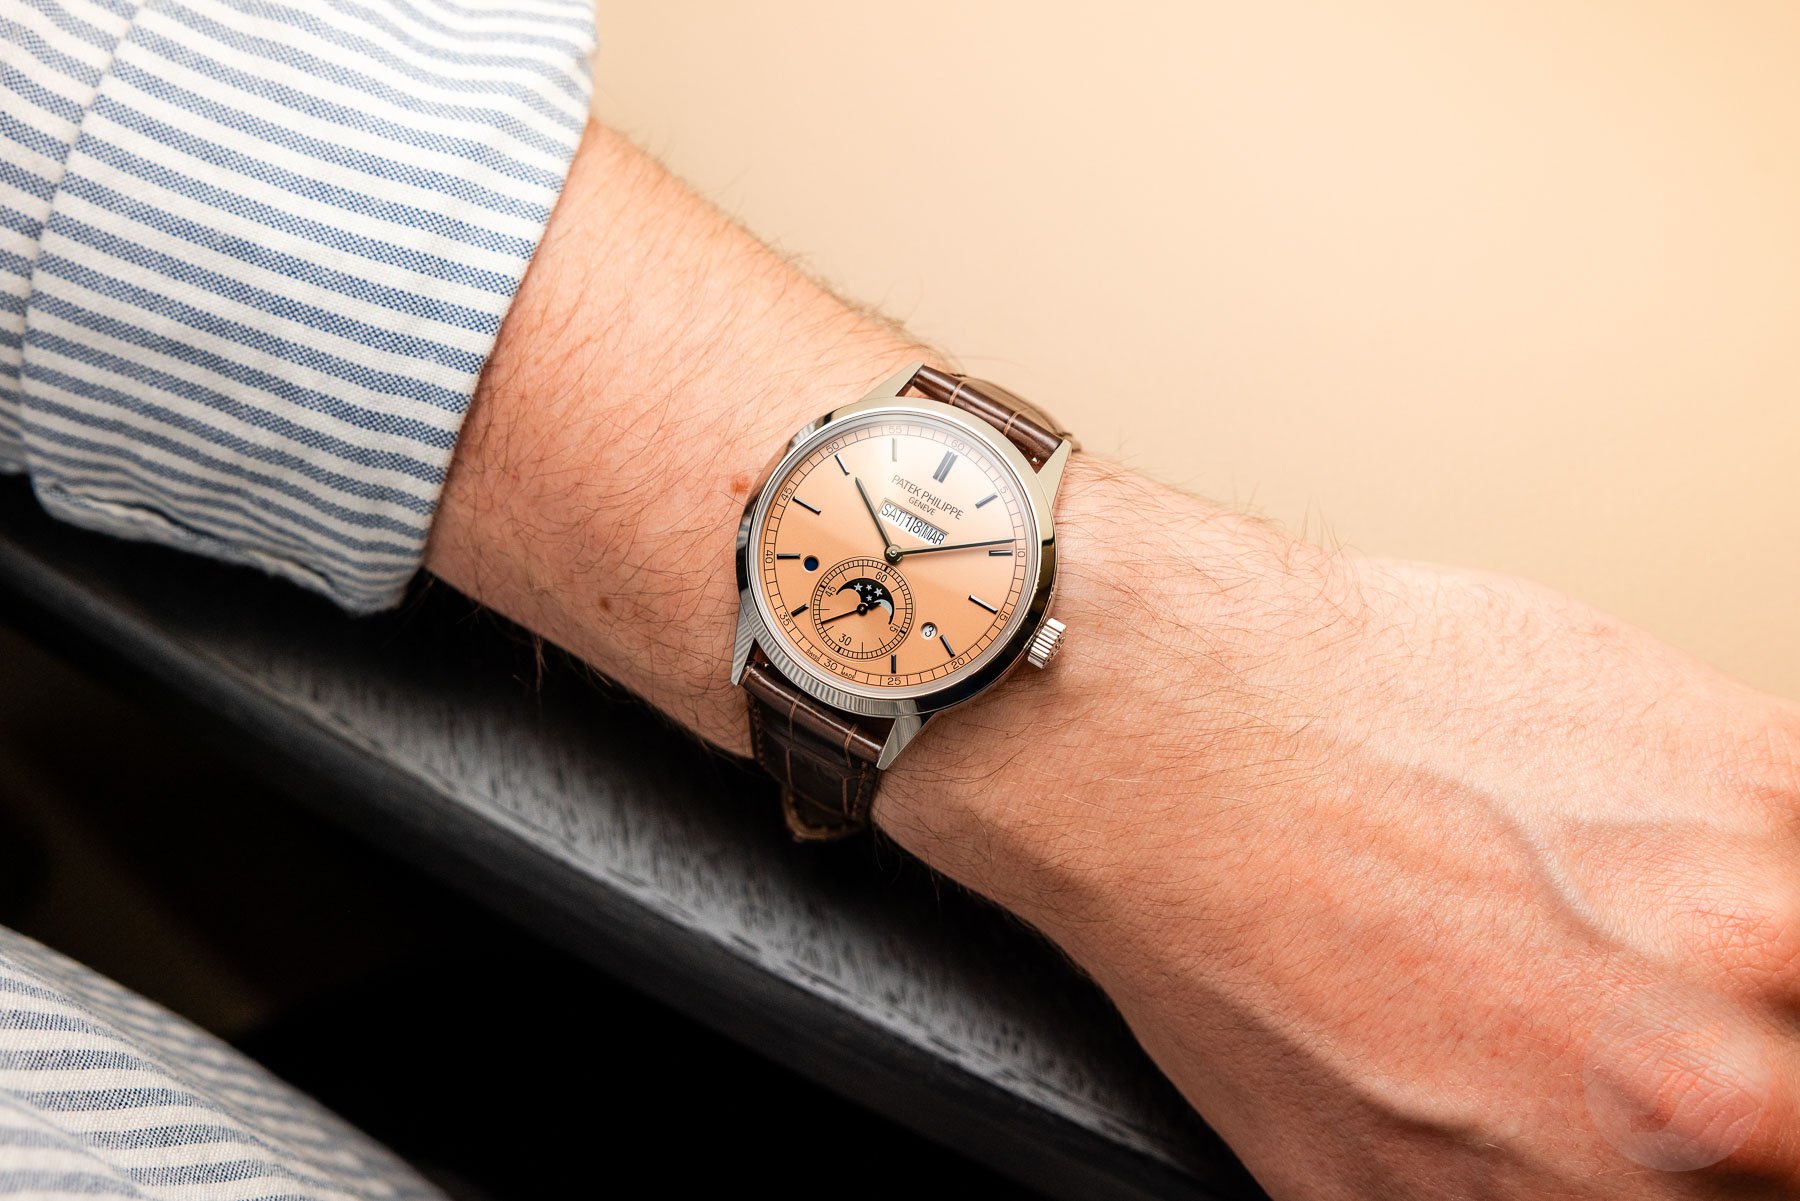 Patek Philippe 5236P In-Line Perpetual Calendar on wrist